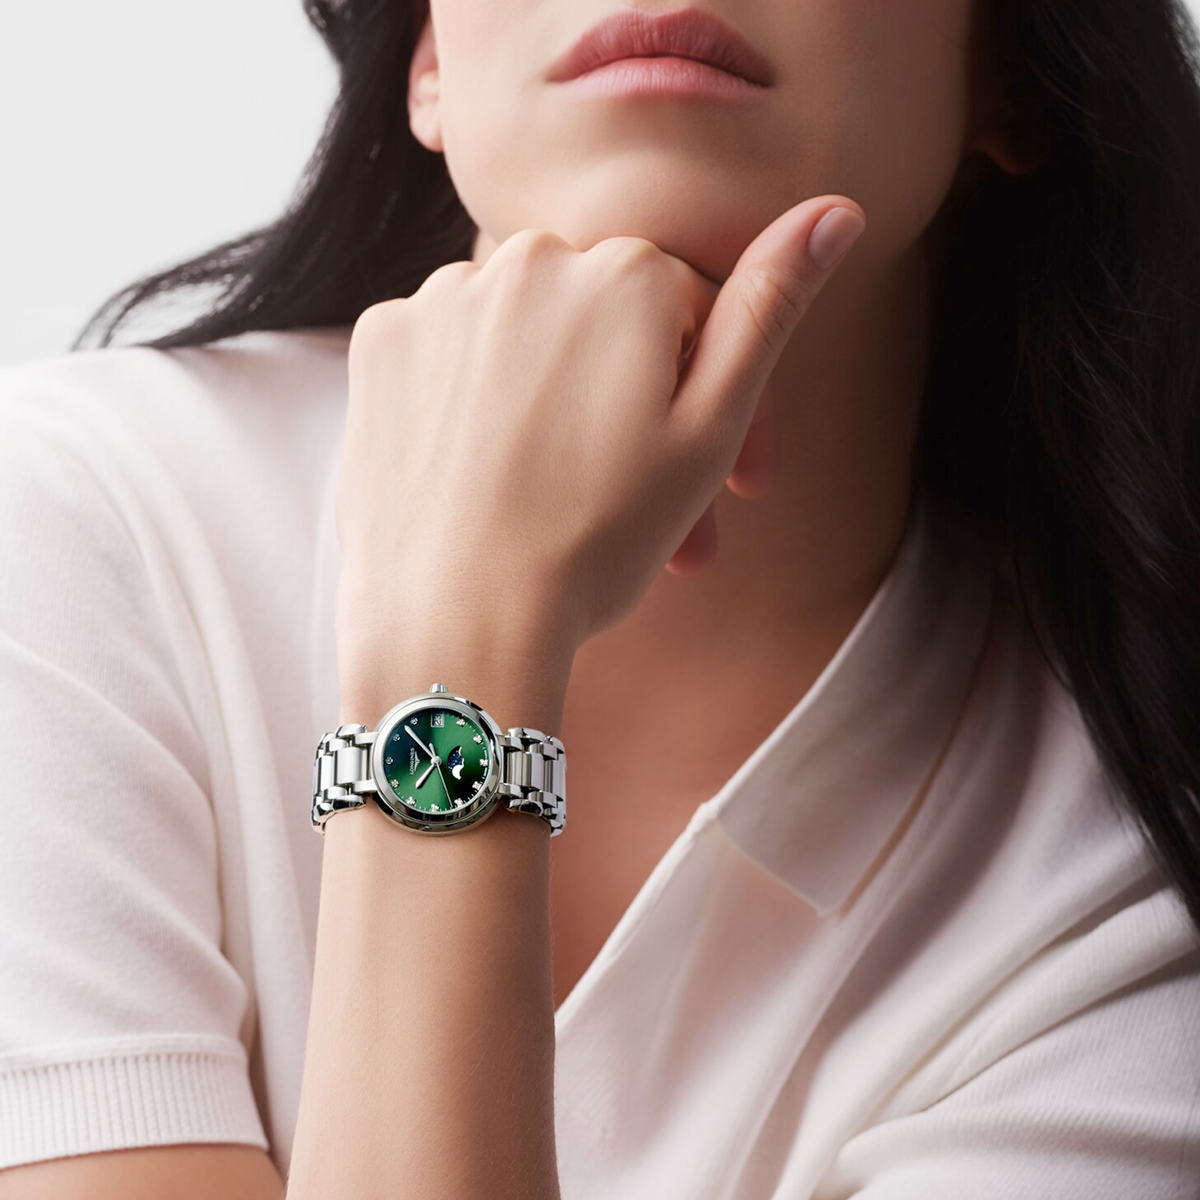 PrimaLuna Moonphase 30.5mm Green Diamond Dial Ladies Bracelet Watch